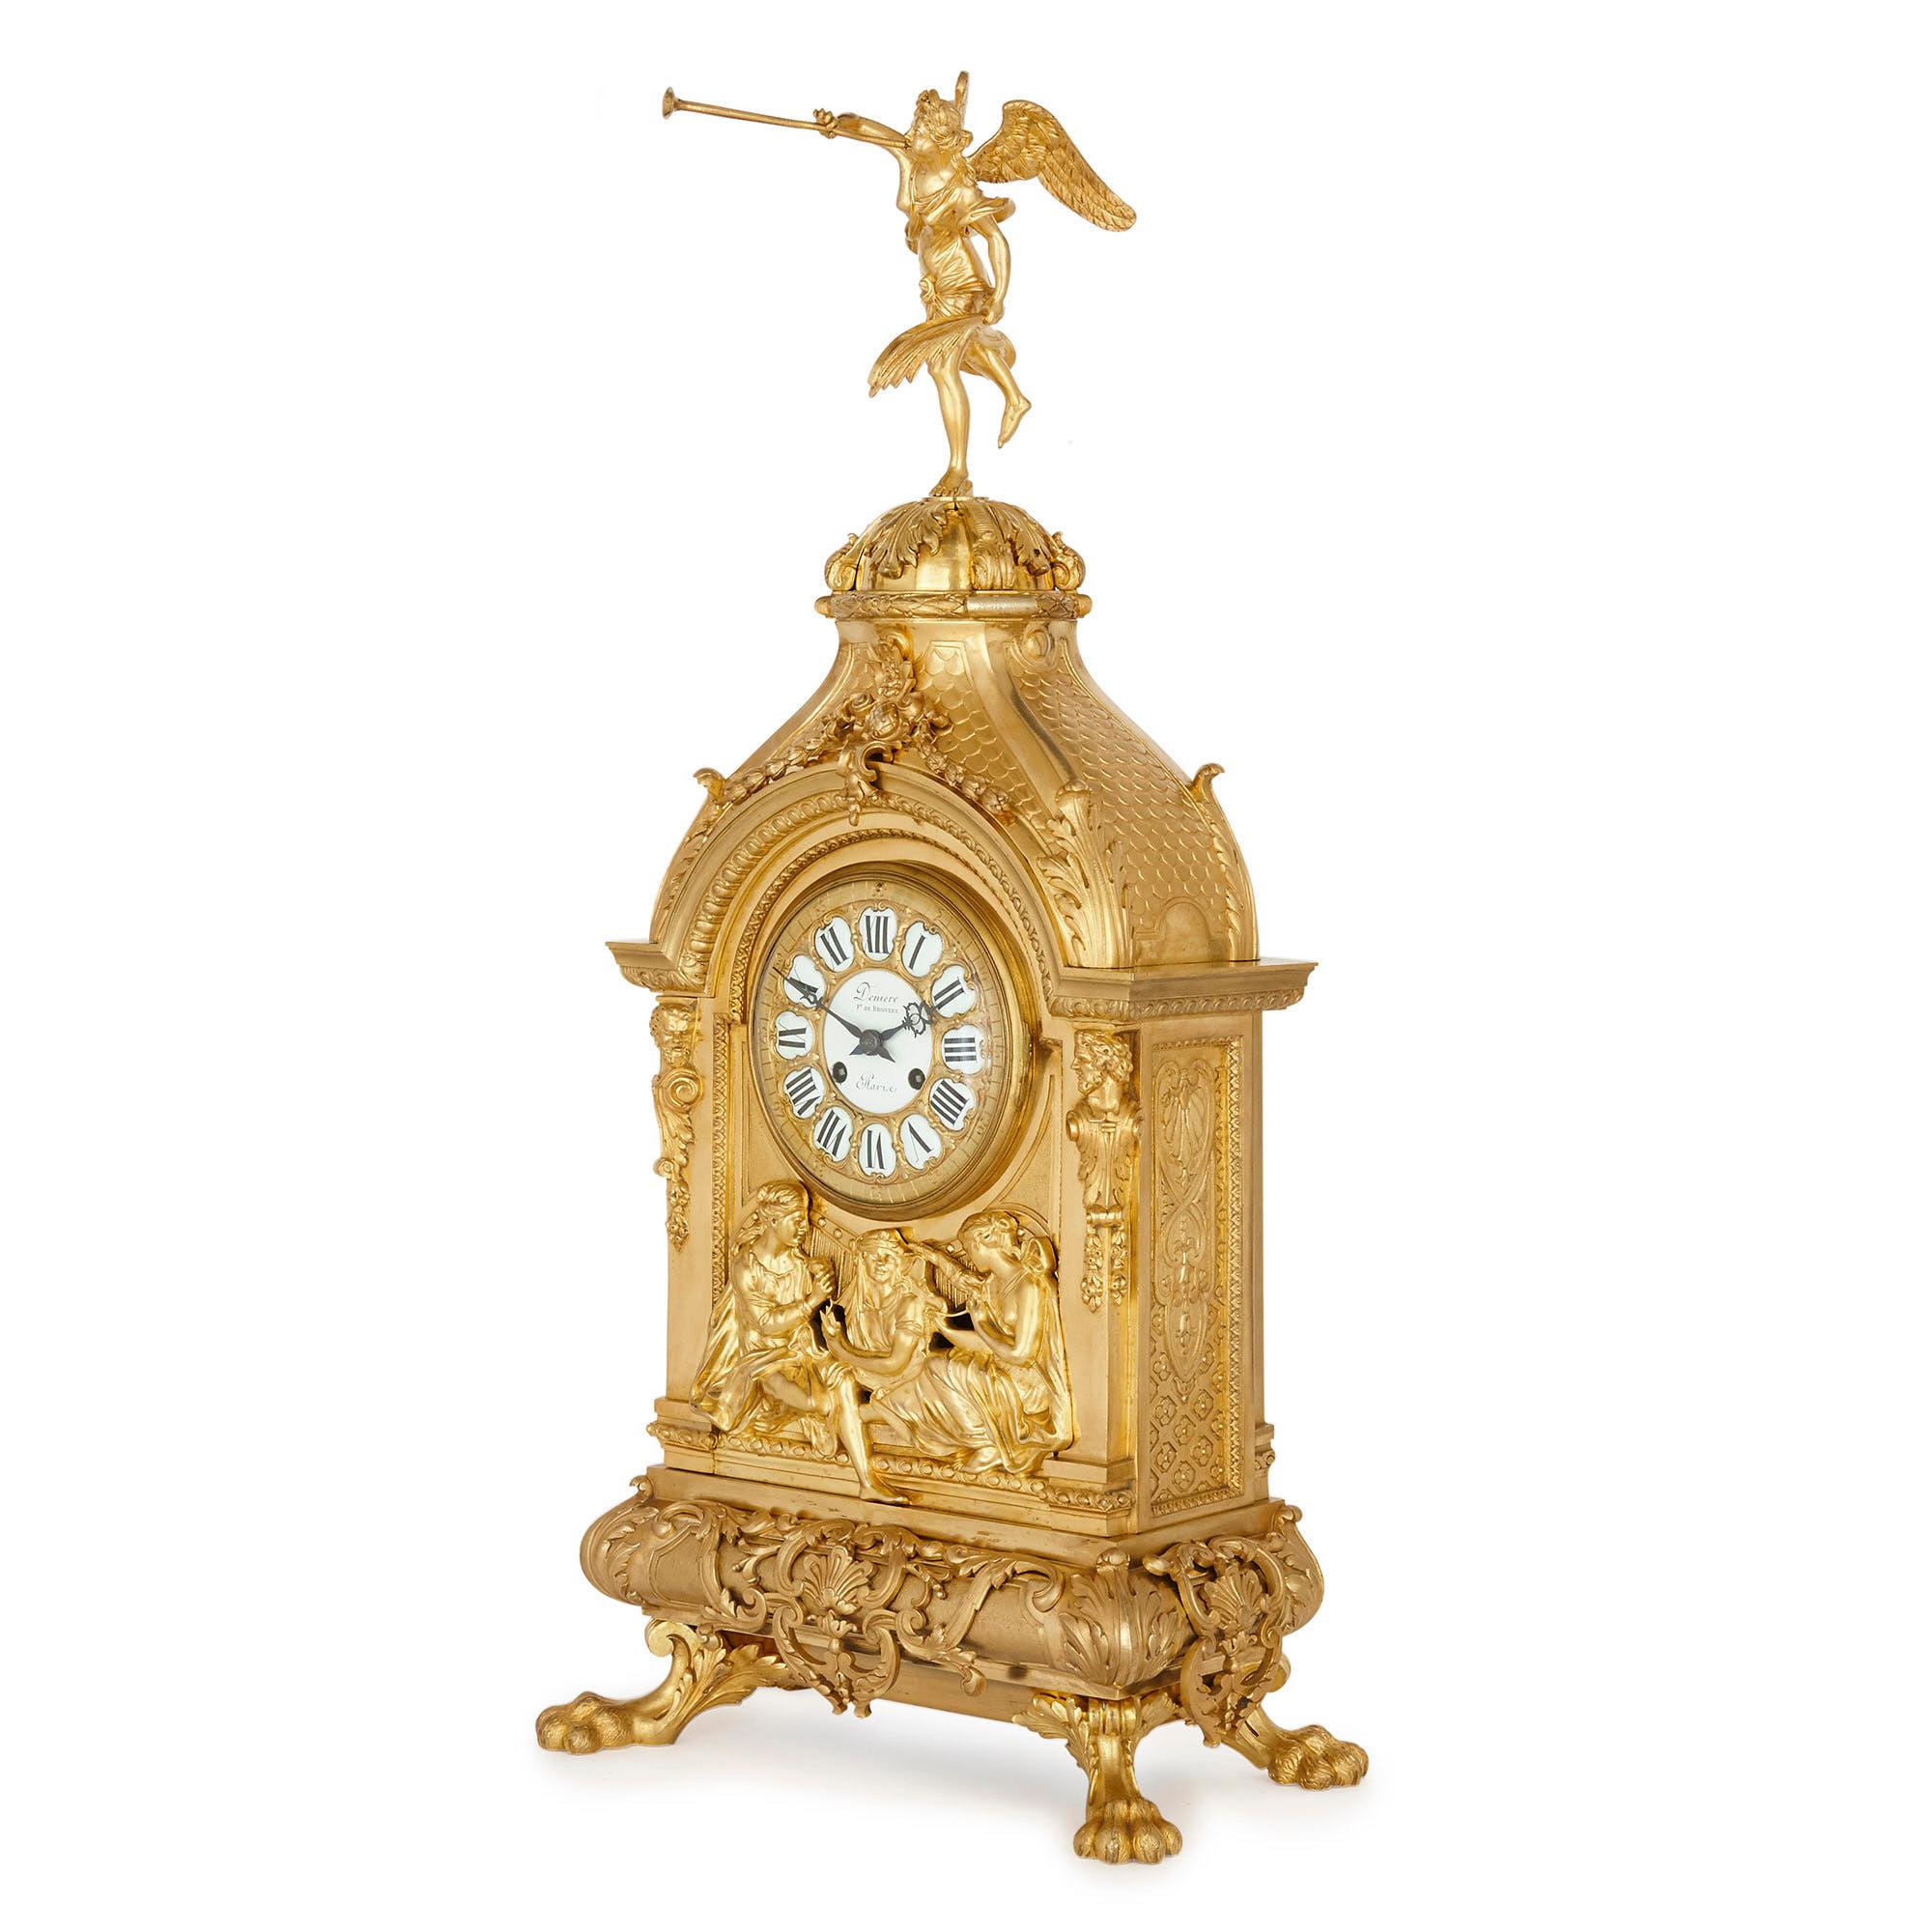 Antique eclectic style gilt bronze clock set by Henri Picard and Denière et Fils
French, late 19th century
Dimensions: Clock height 78cm, width 36cm, depth 24cm, candelabra height 76cm, width 37.5cm, depth 29cm

This fine three-piece clock set